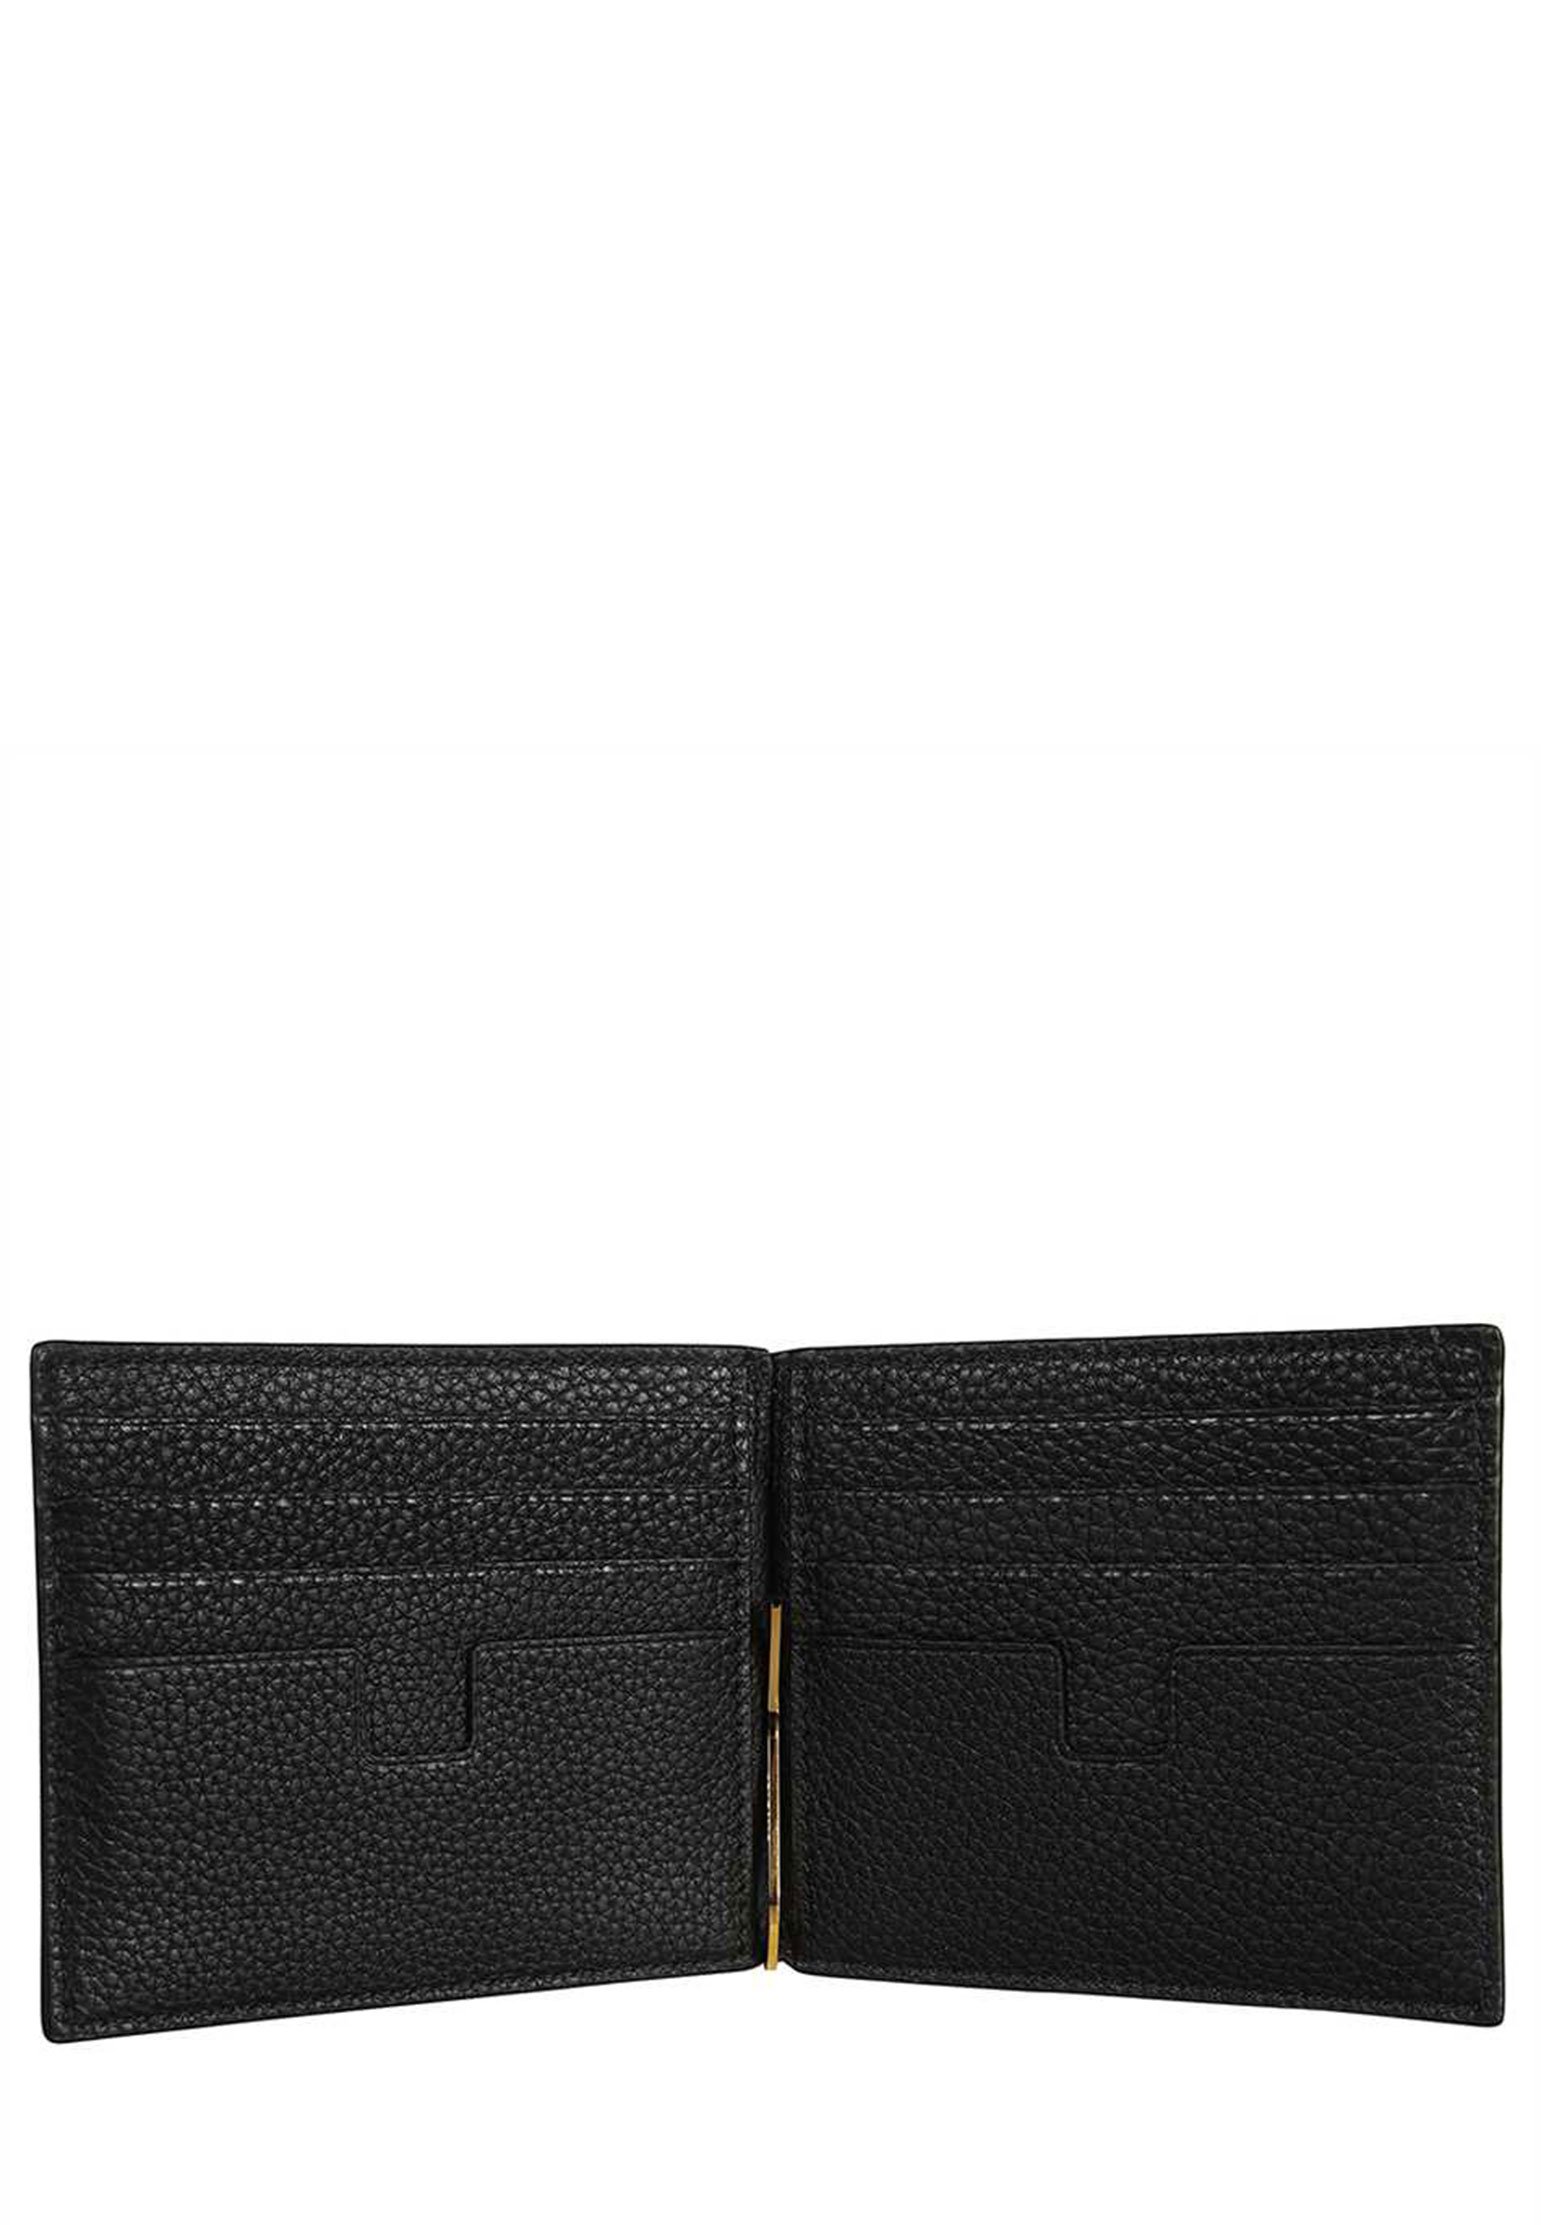 Wallet TOM FORD Color: black (Code: 376) in online store Allure